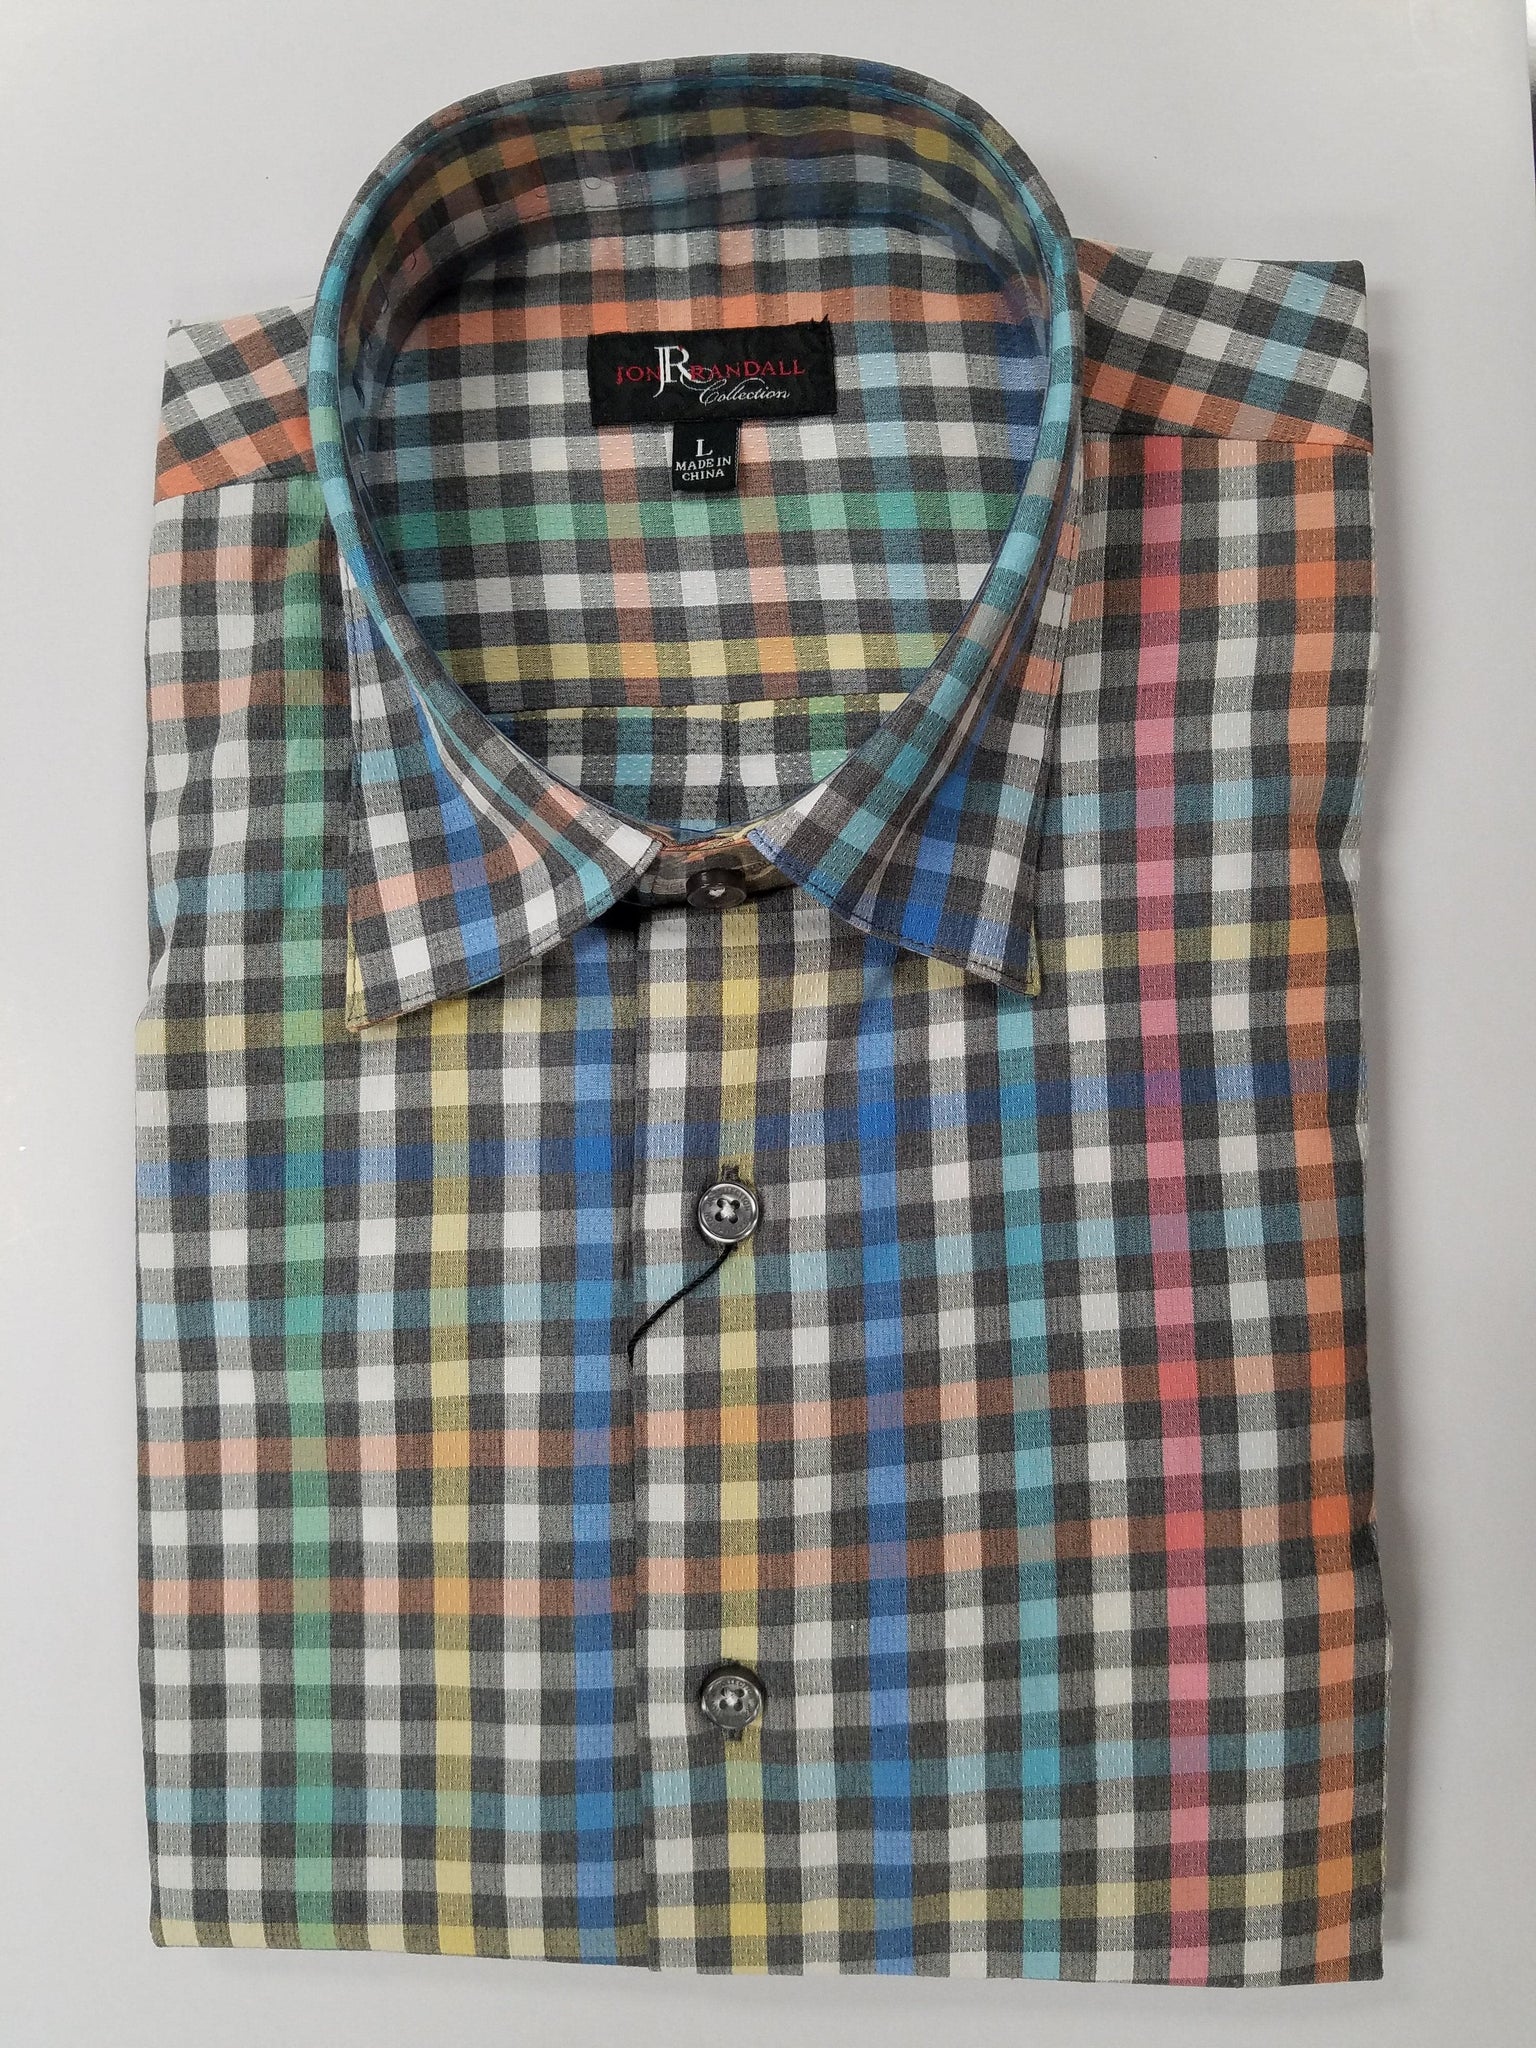 Jon Randall Collection Rainbow Colored Sport Shirt - Rainwater's Men's Clothing and Tuxedo Rental